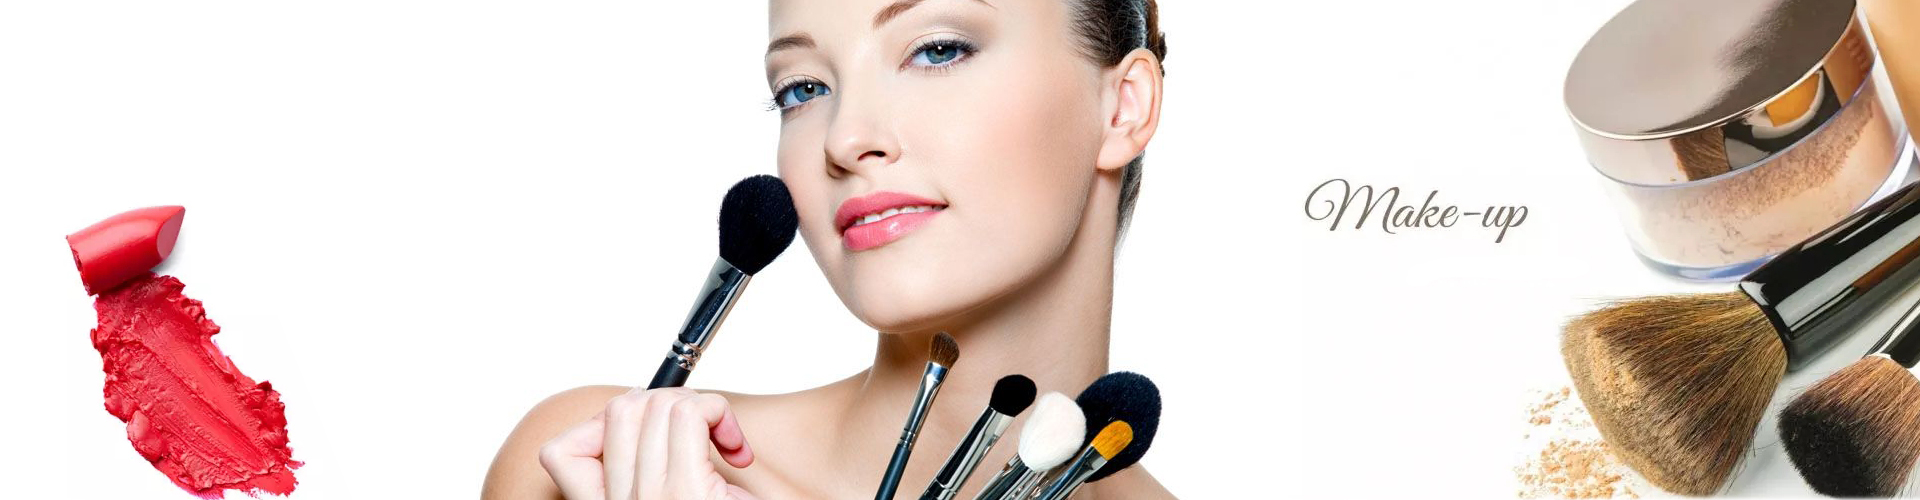 Foundation make-up & eyeshadow